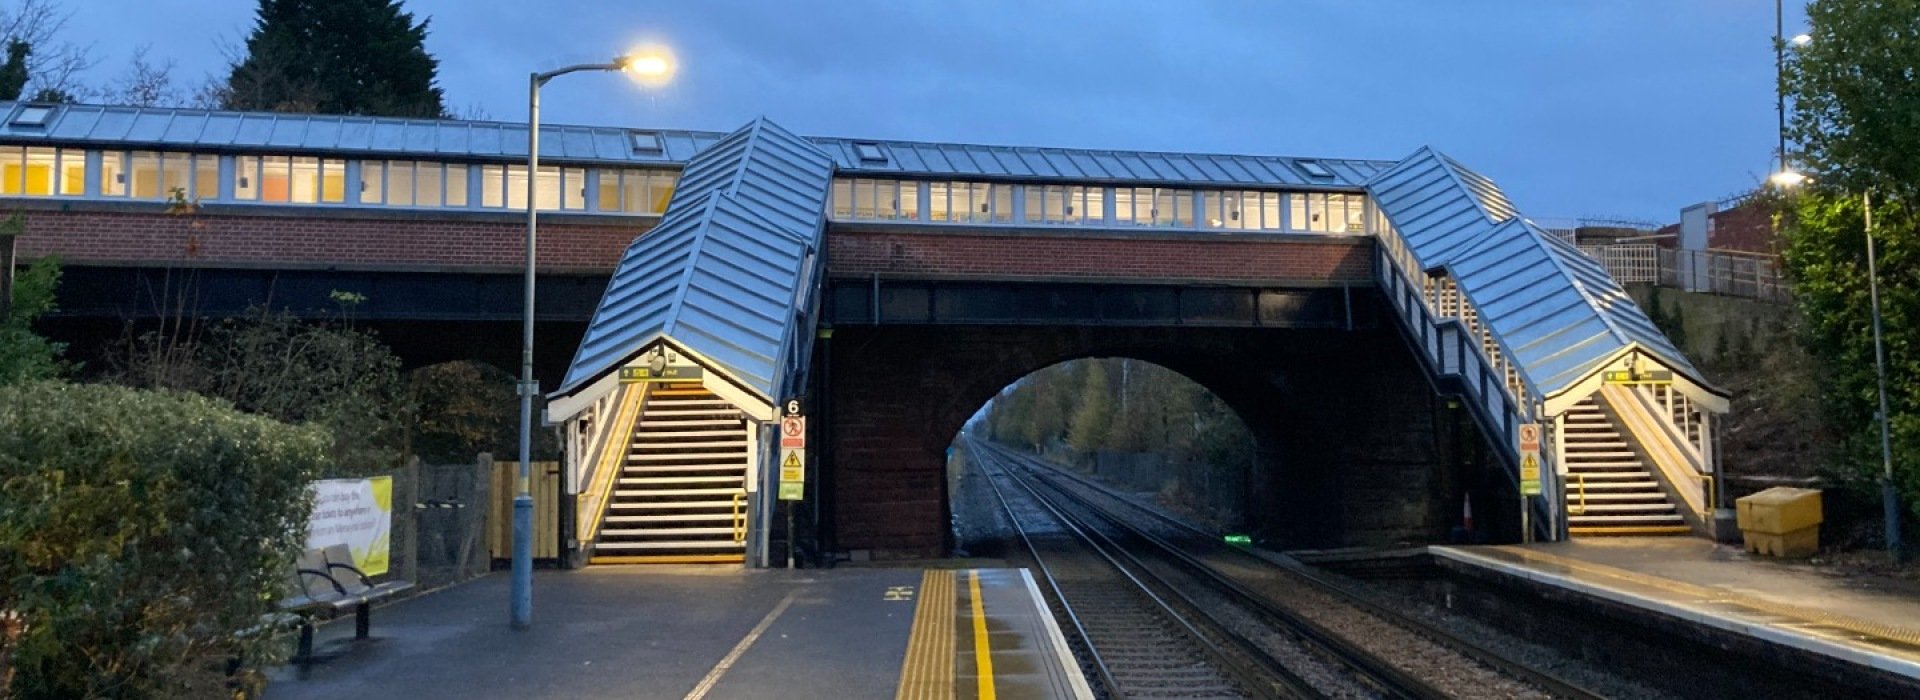 Bromborough Station Footbridge, Wirral